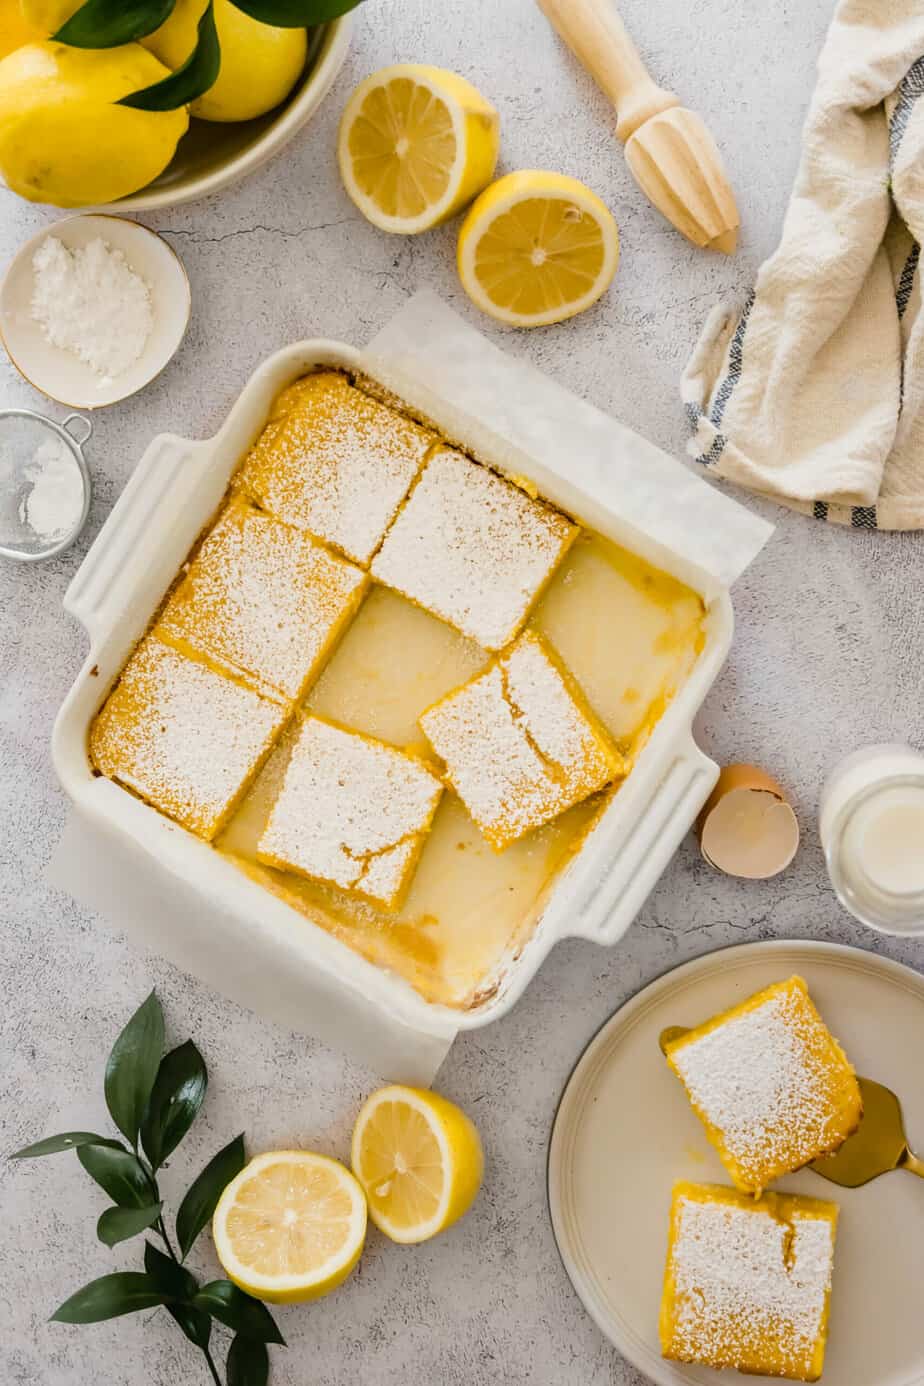 Lemon bars in a white dish with fresh lemons and powdered sugar.